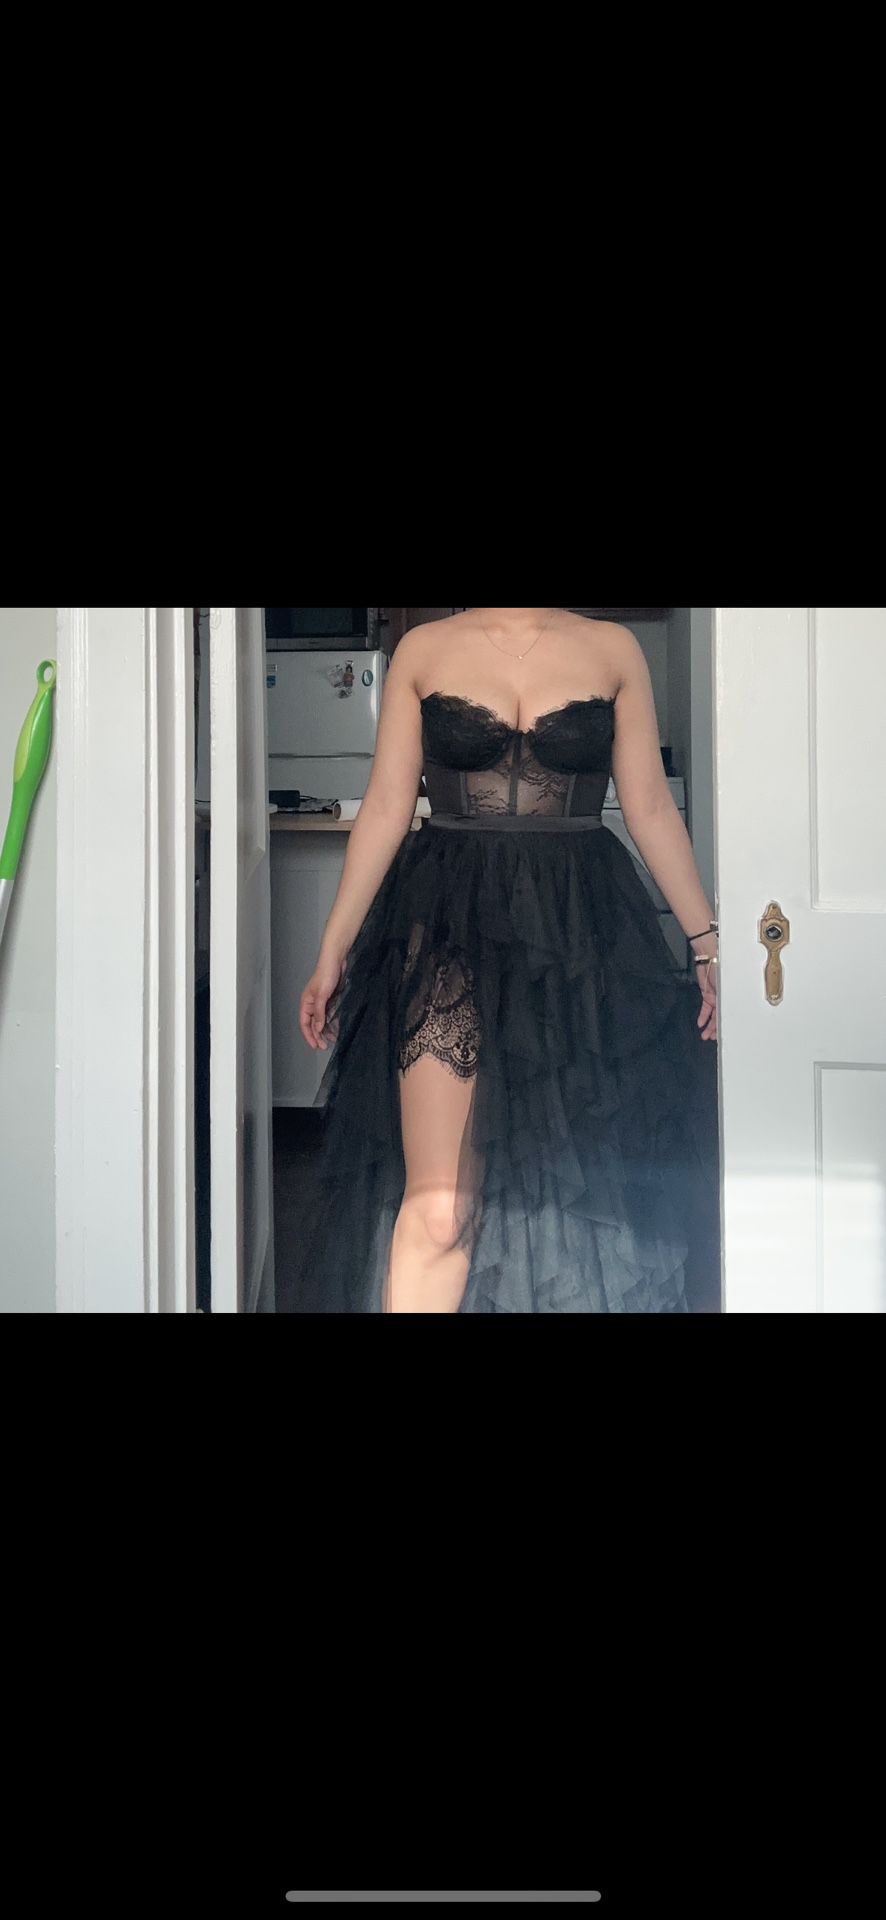 Anastasia Tulle Maxi Dress medium Black for Sale in Chicago, IL - OfferUp